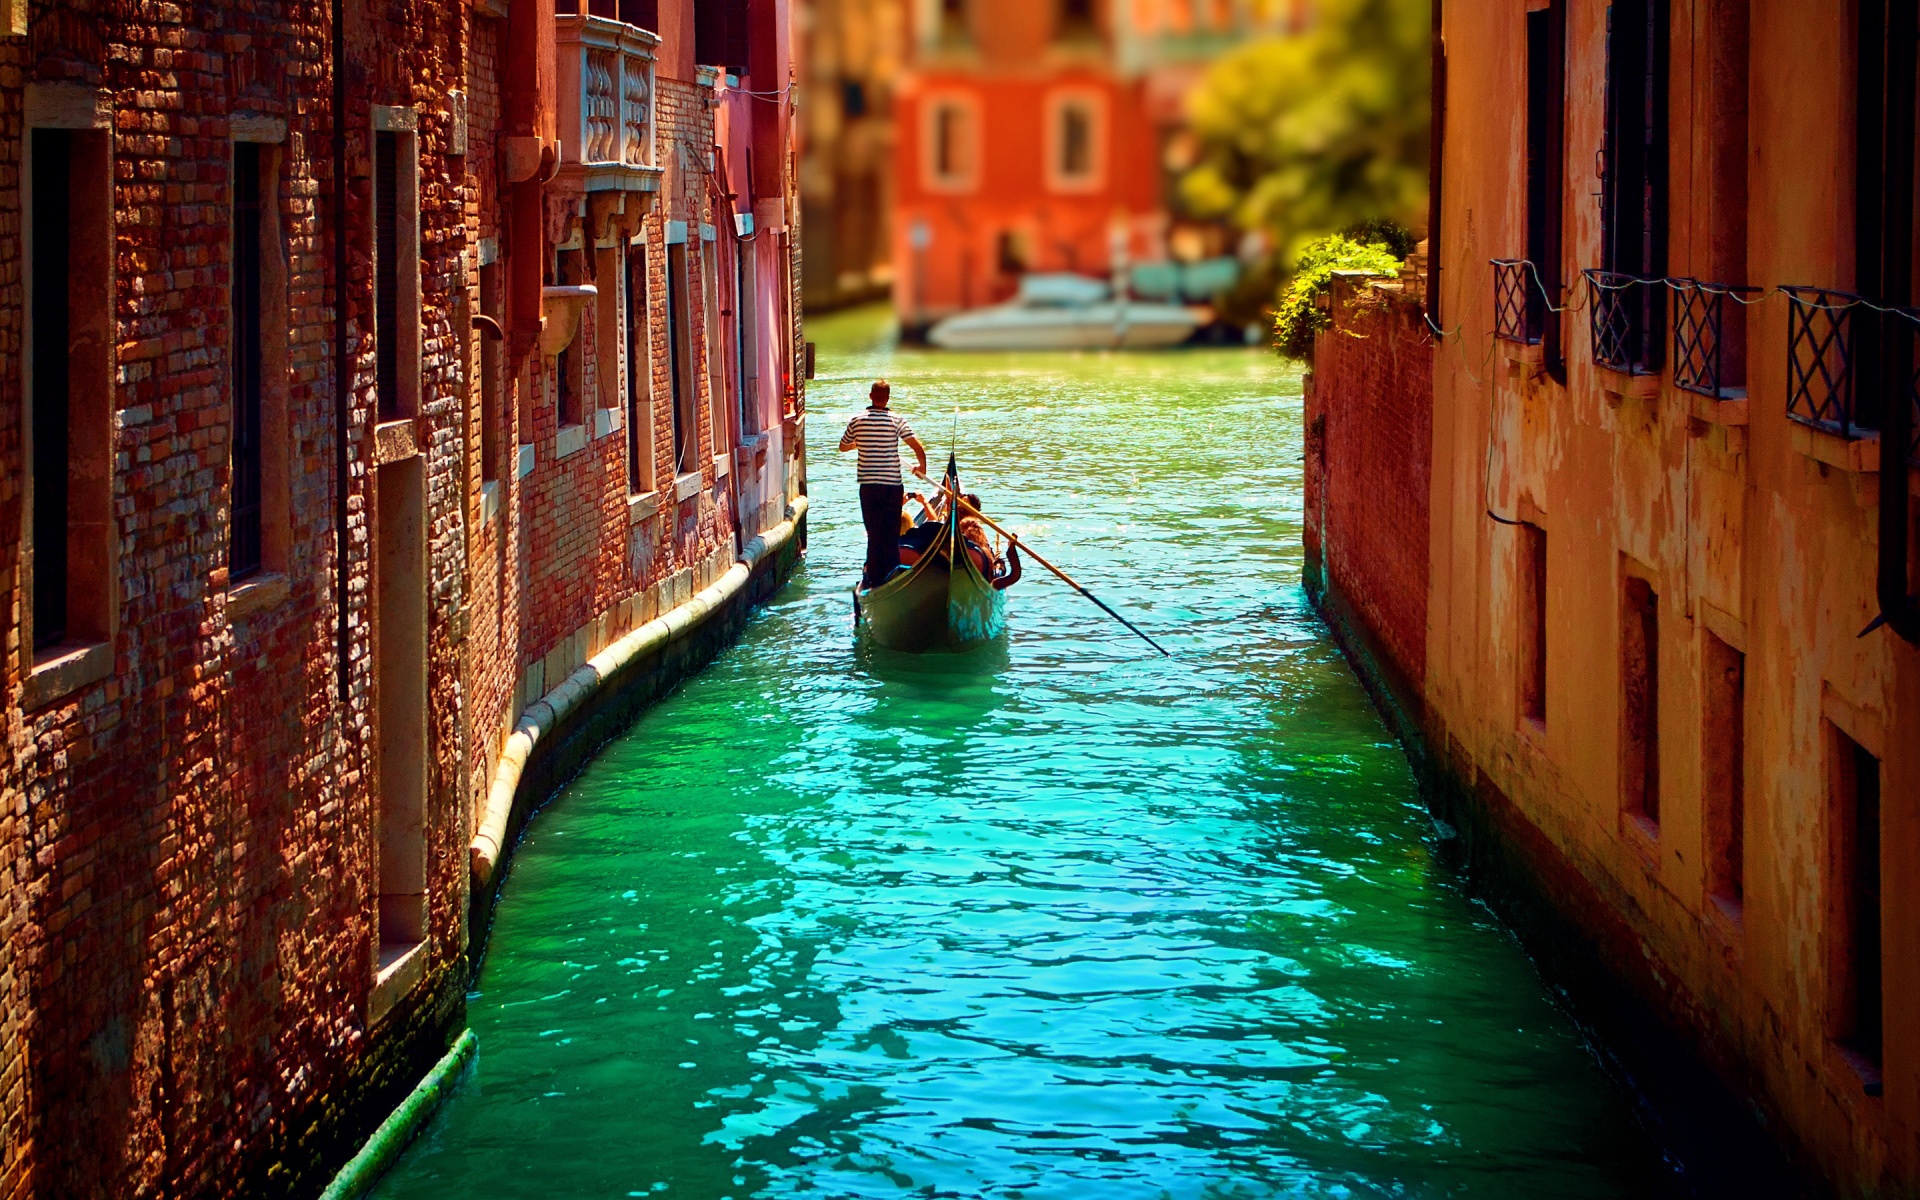 Venice 4K Wallpapers